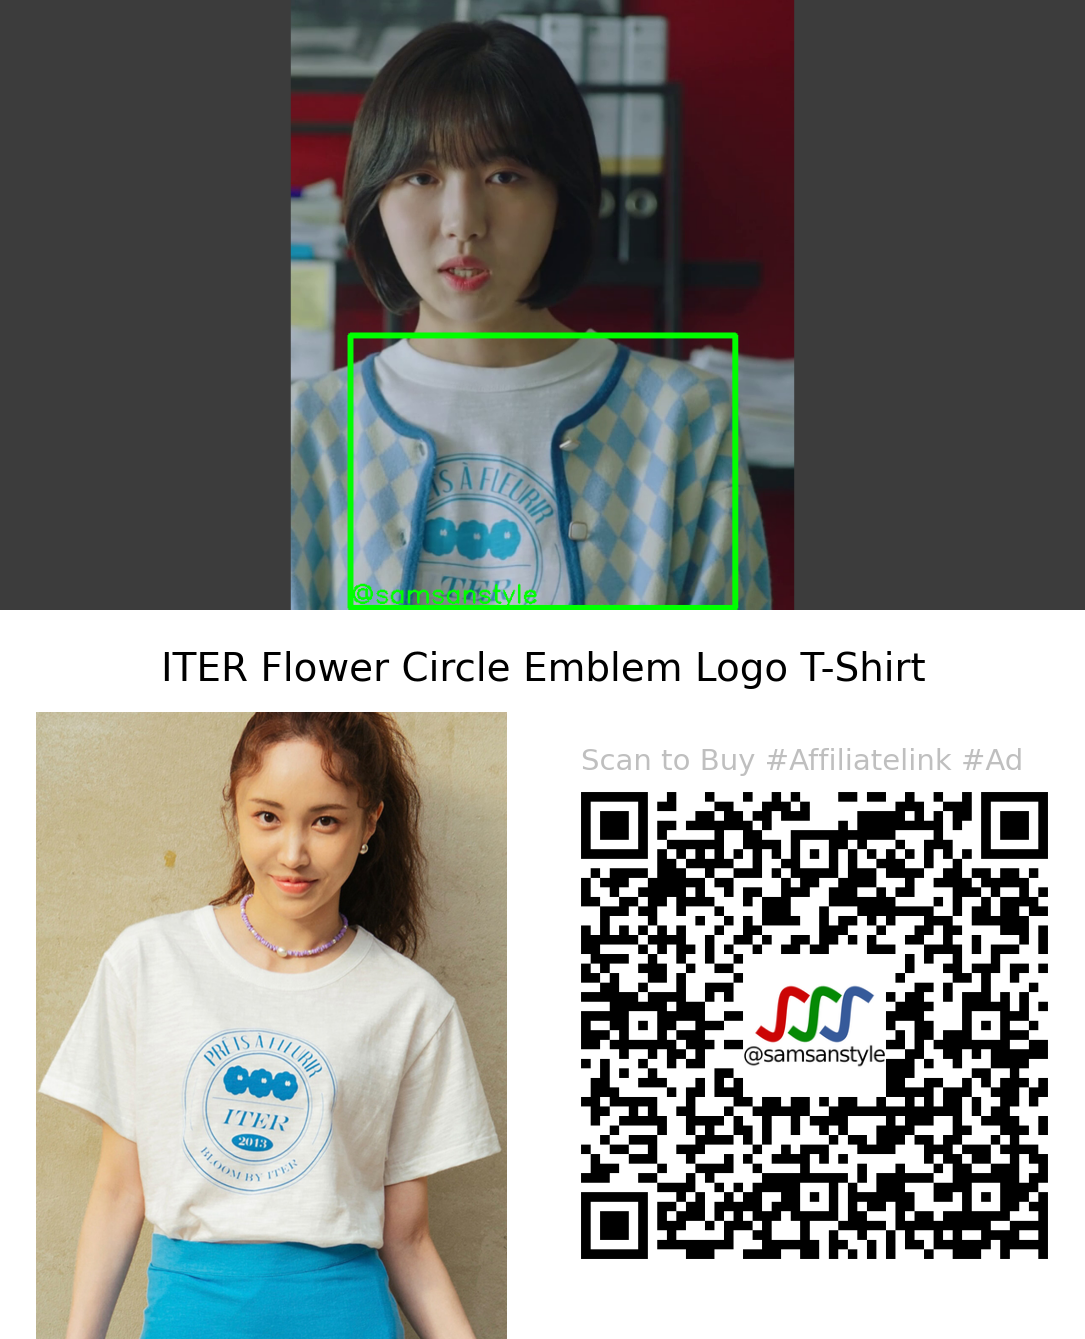 Joo Hyunyoung | Behind Every Star E06 | ITER Flower Circle Emblem Logo T-Shirt